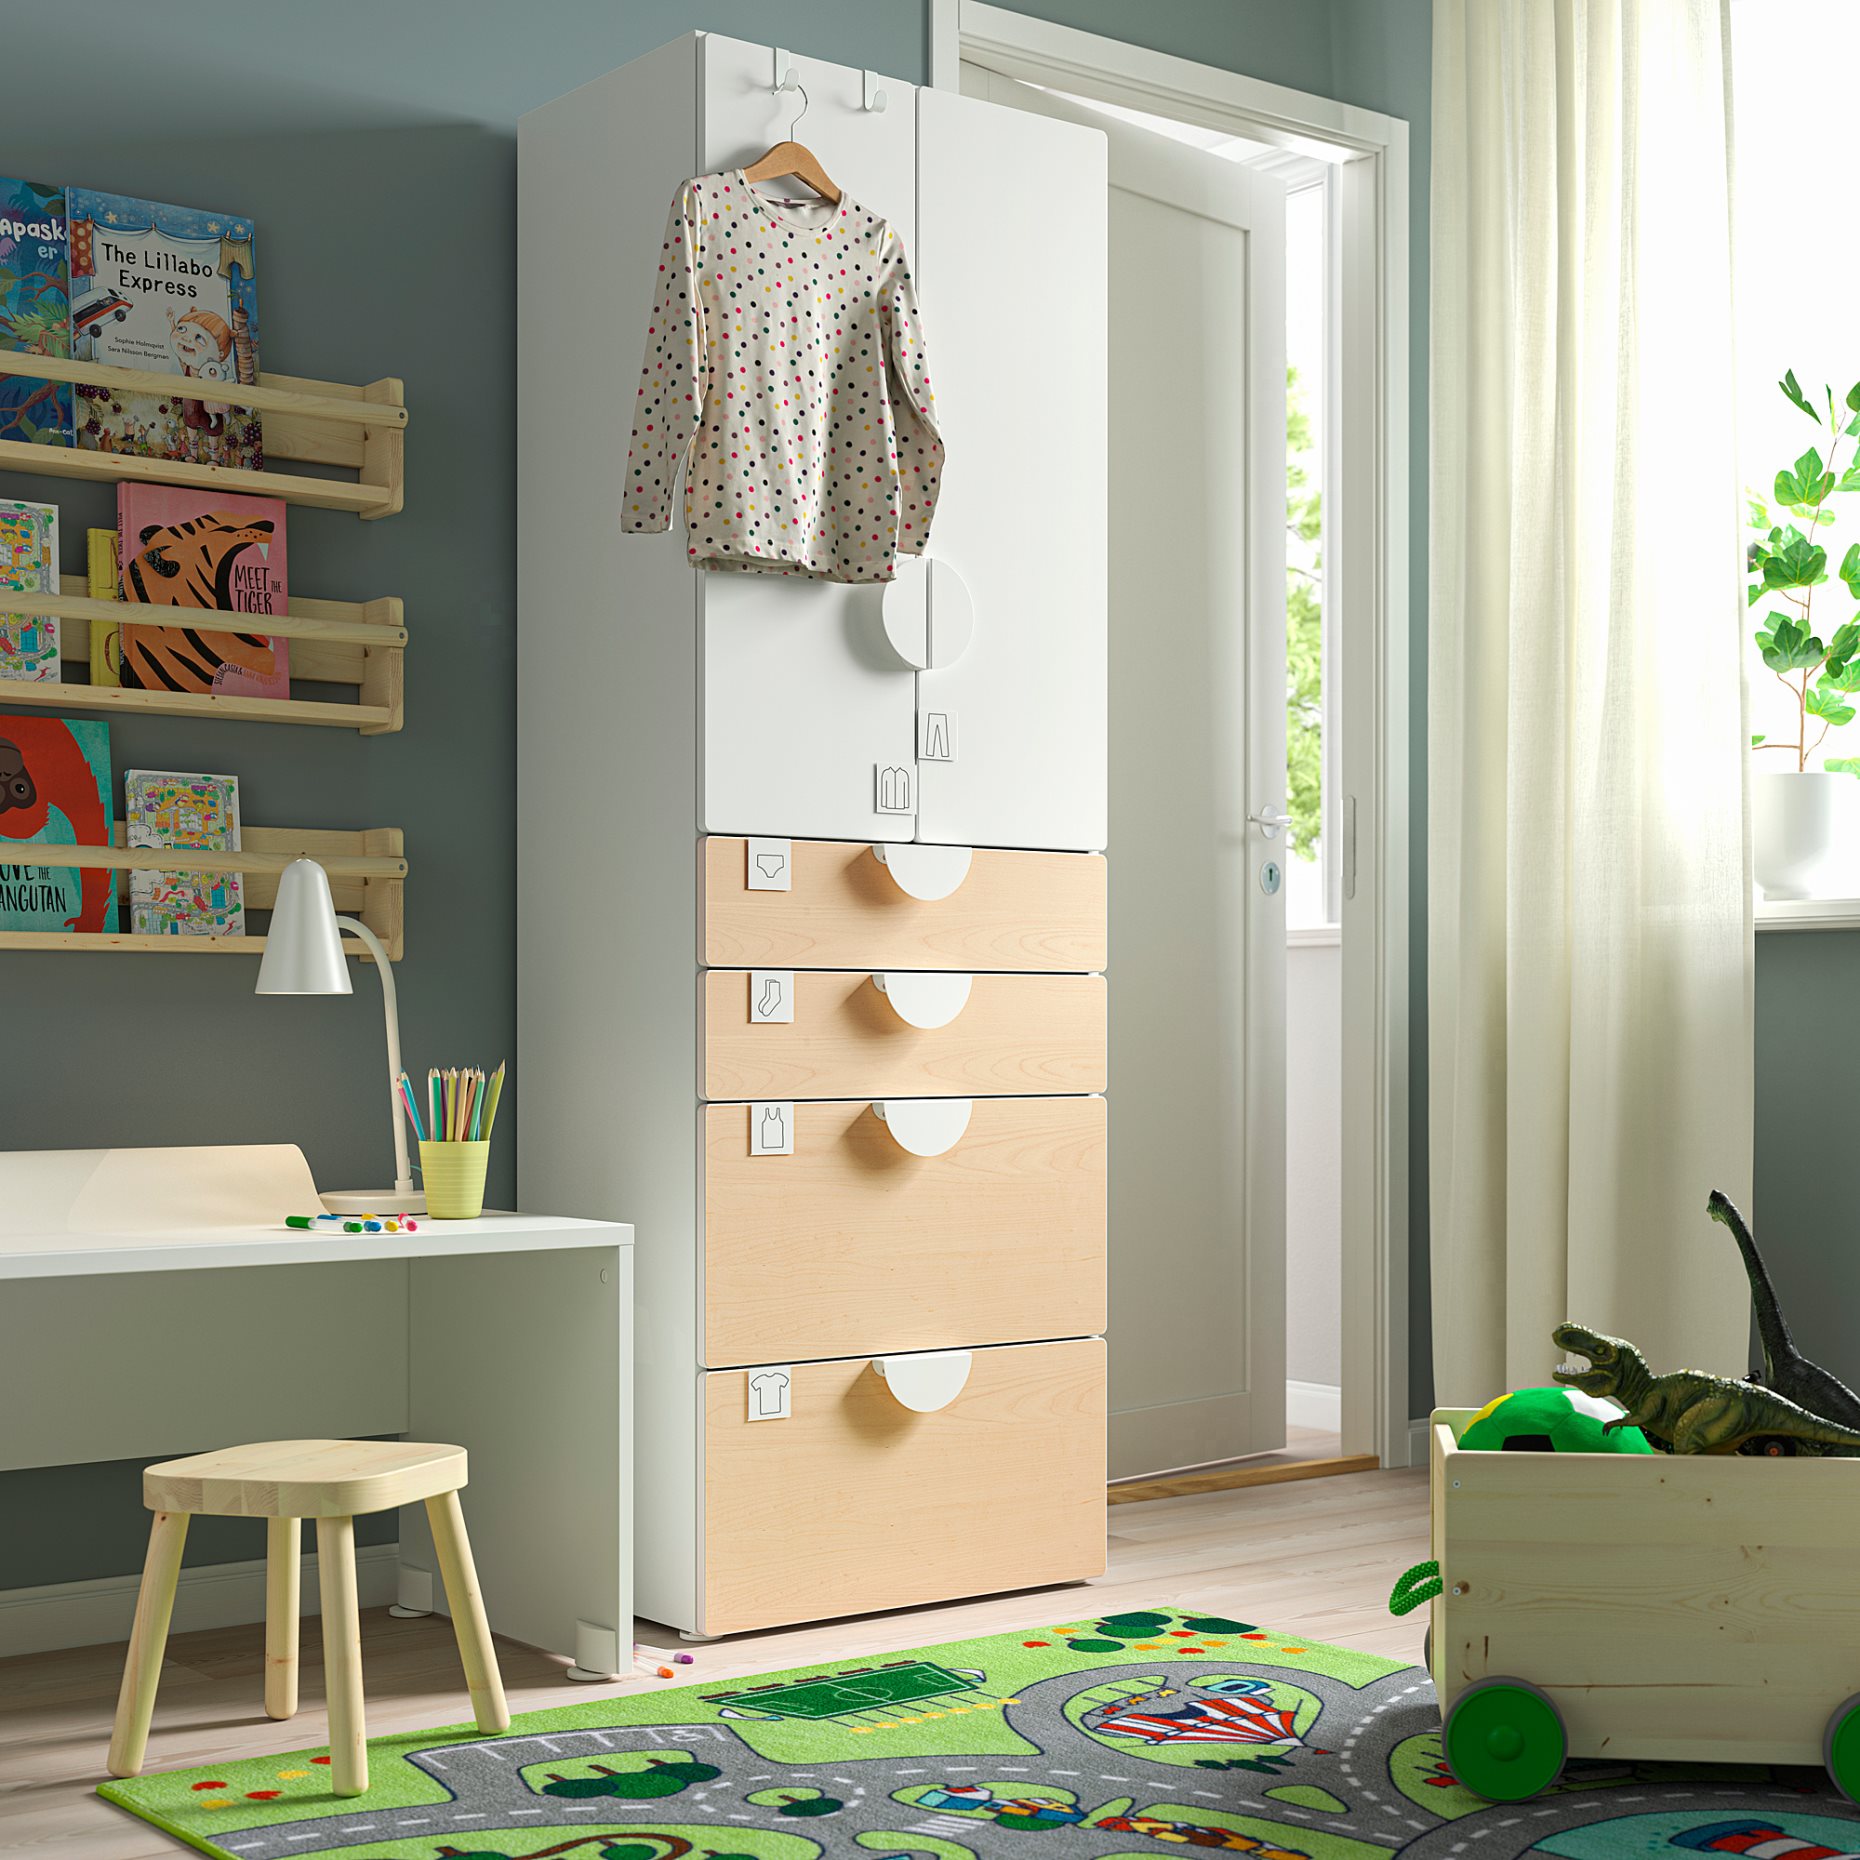 SMASTAD/PLATSA, wardrobe with 4 drawers, 60x42x181 cm, 994.263.77